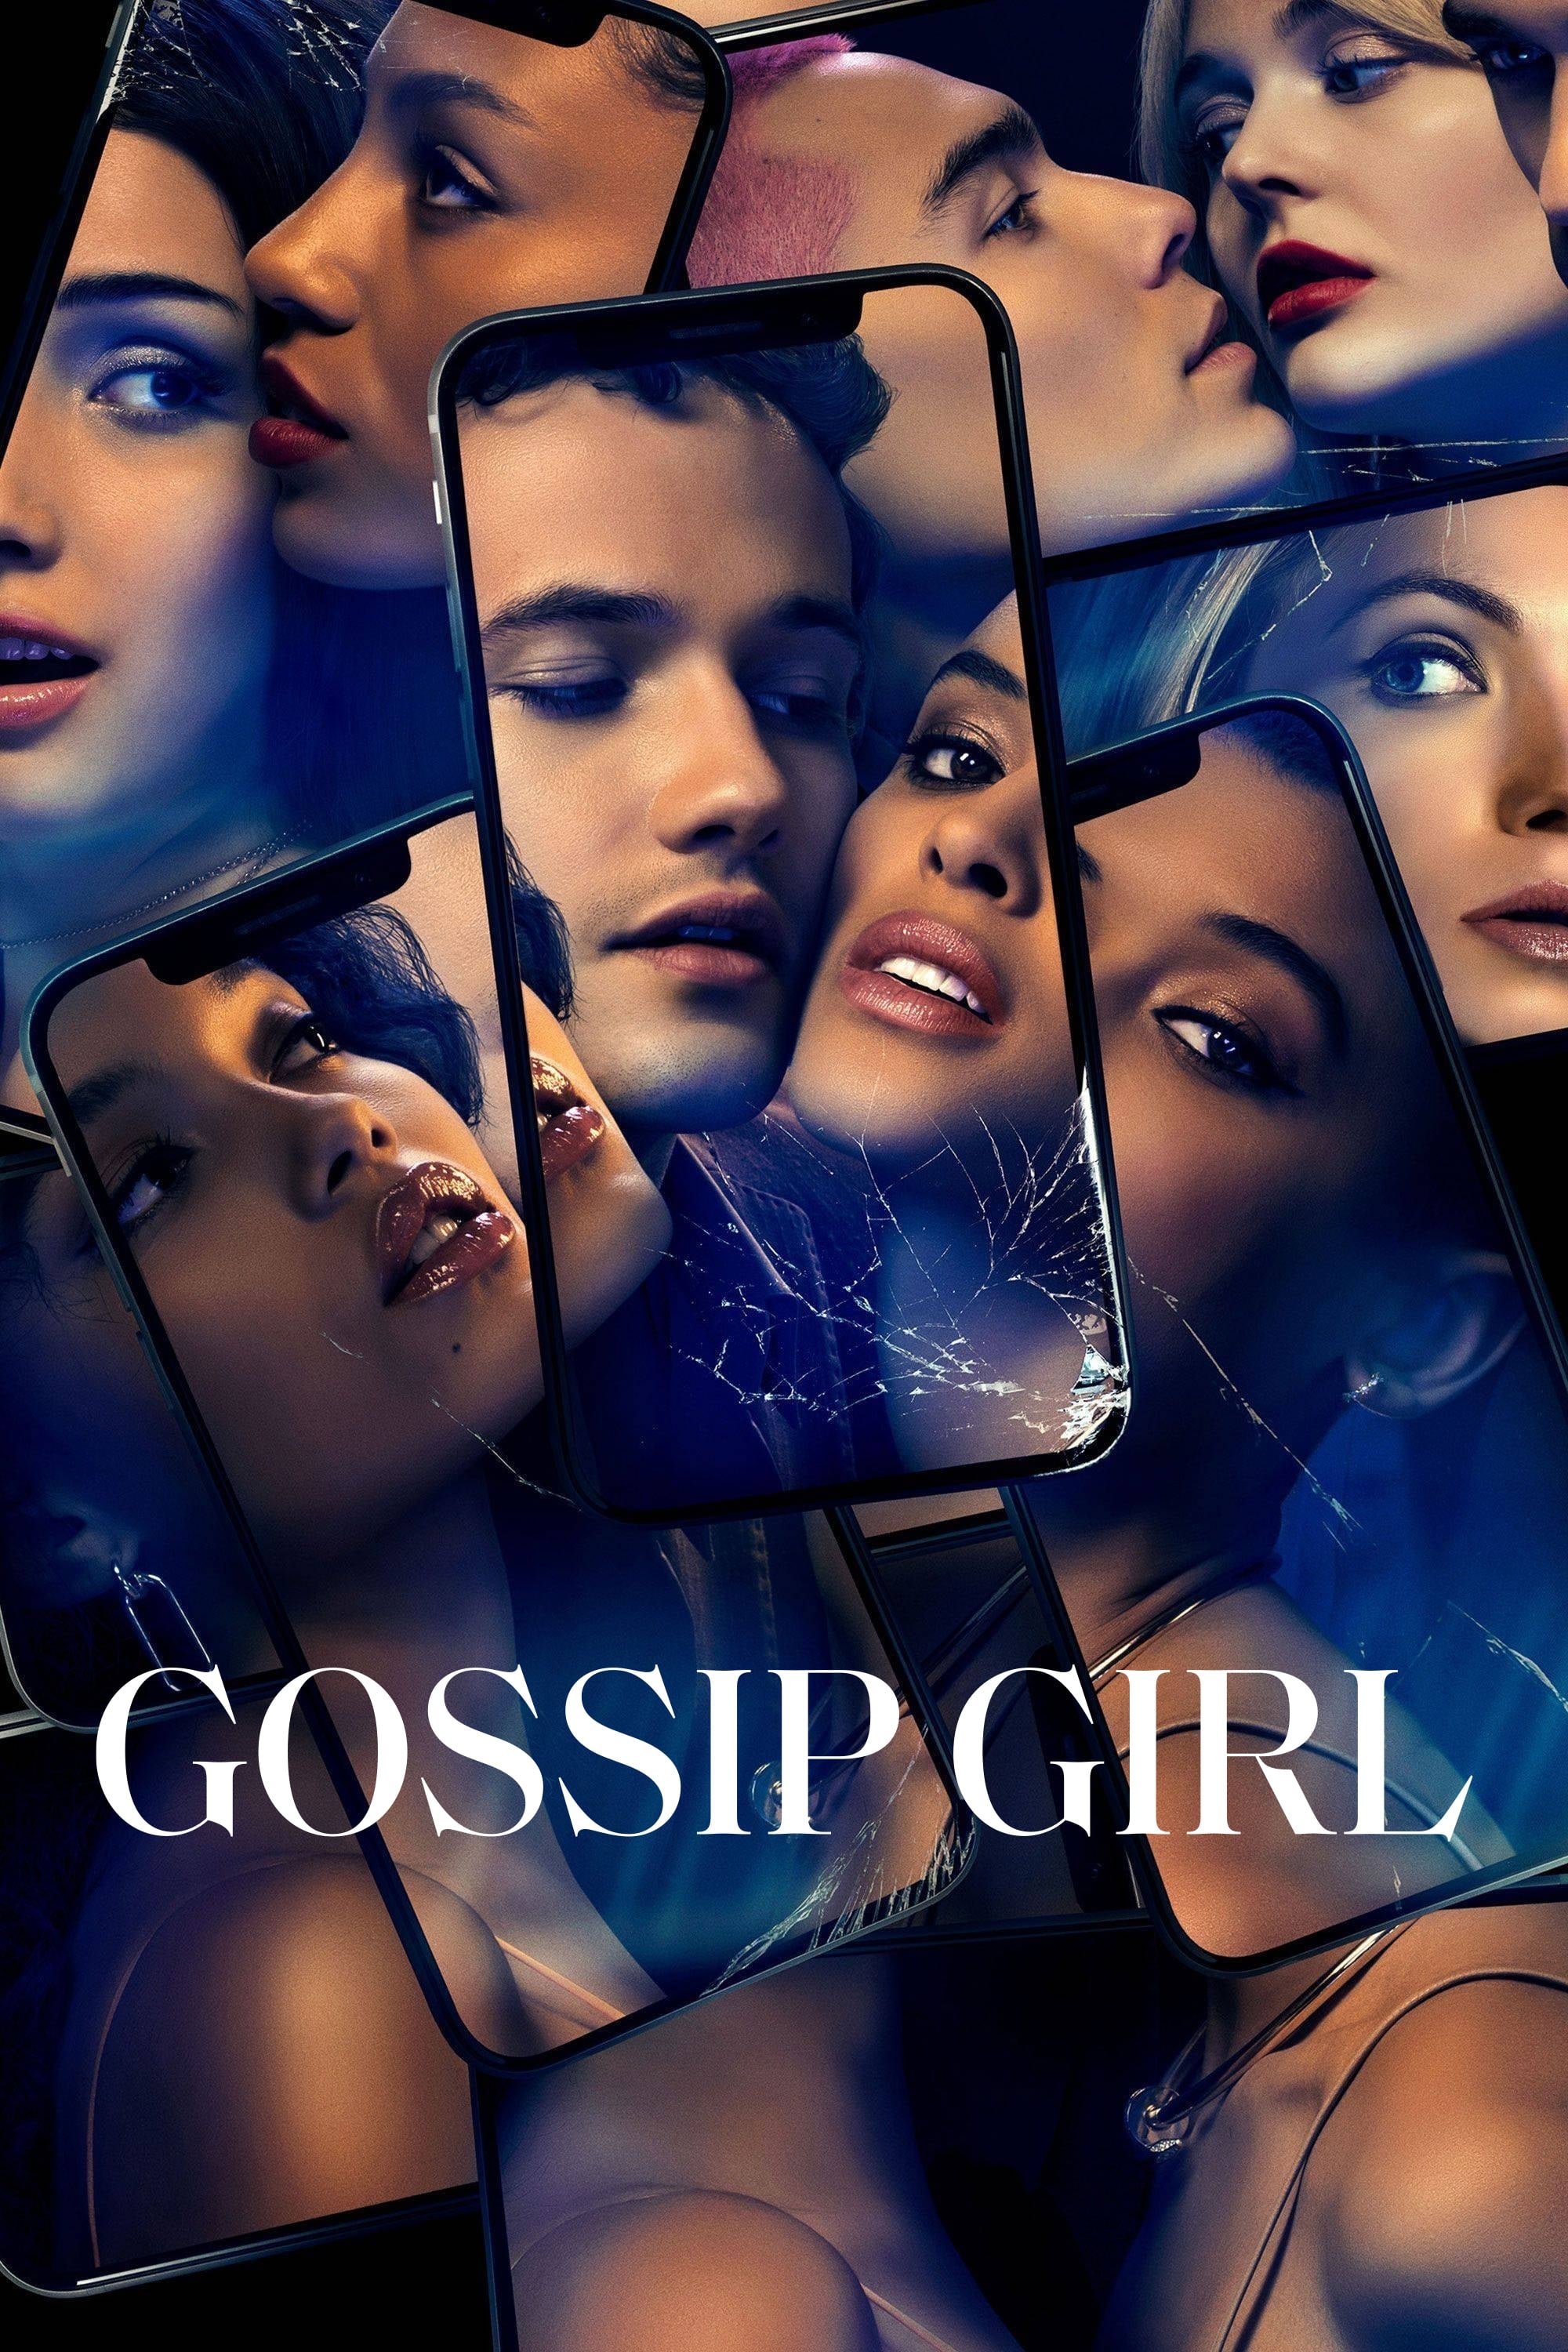 Gossip Girl rating